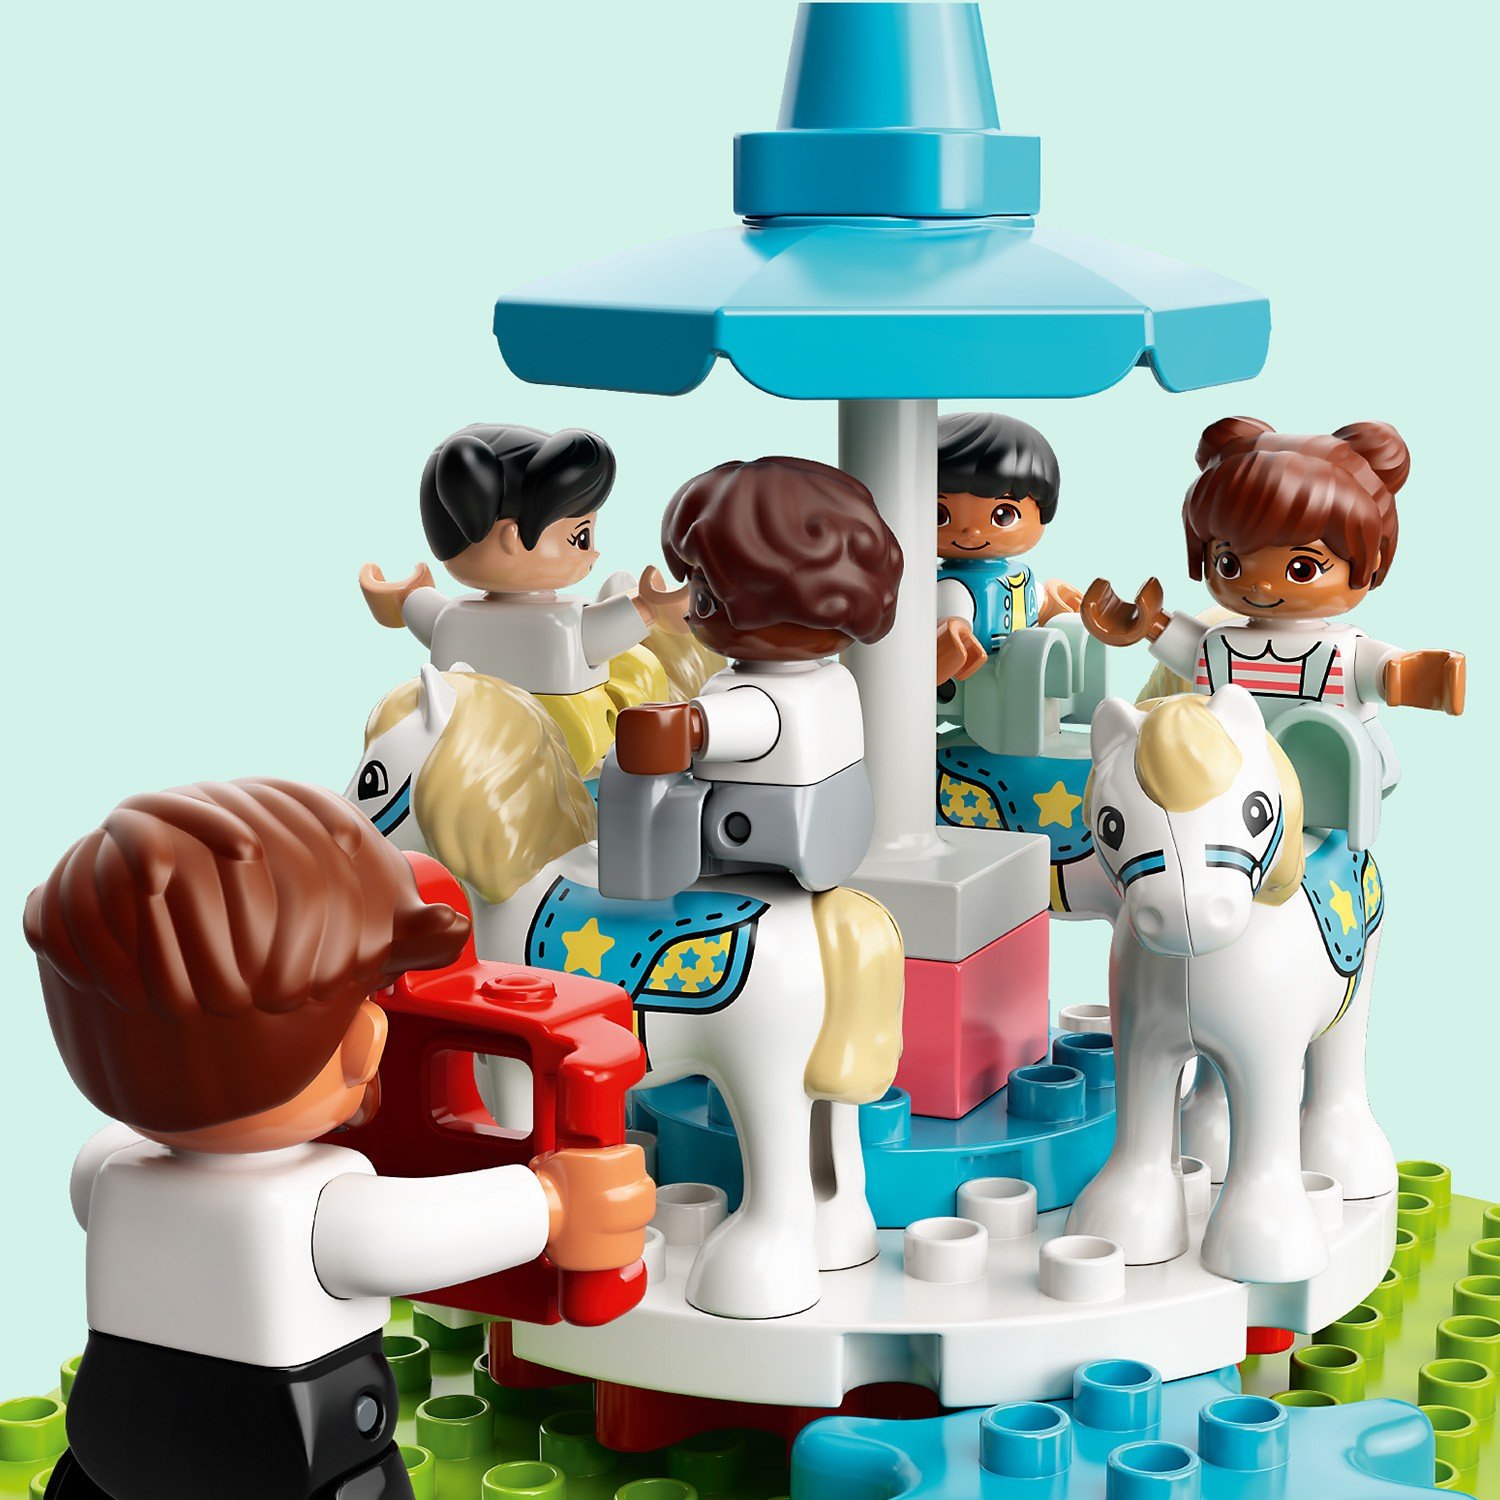 Lego Duplo 10956 Парк развлечений